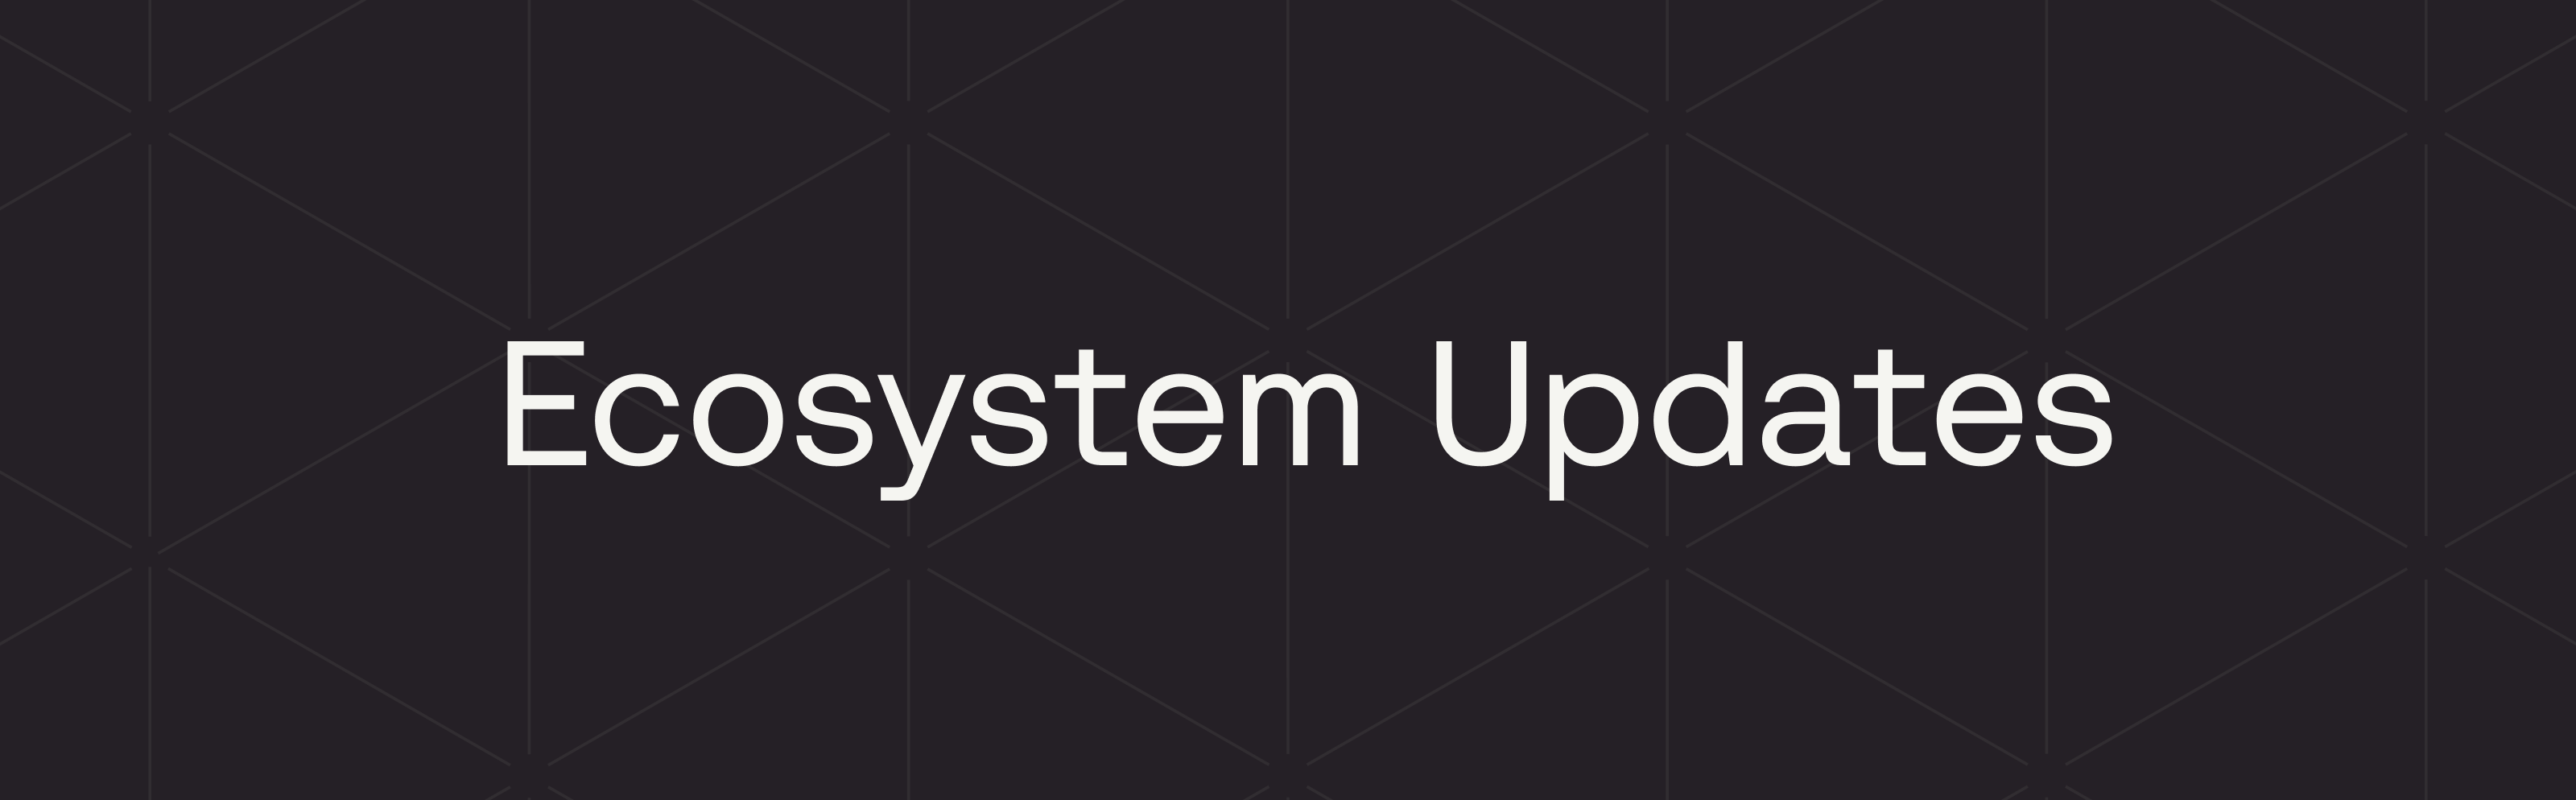 Ecosystem Updates